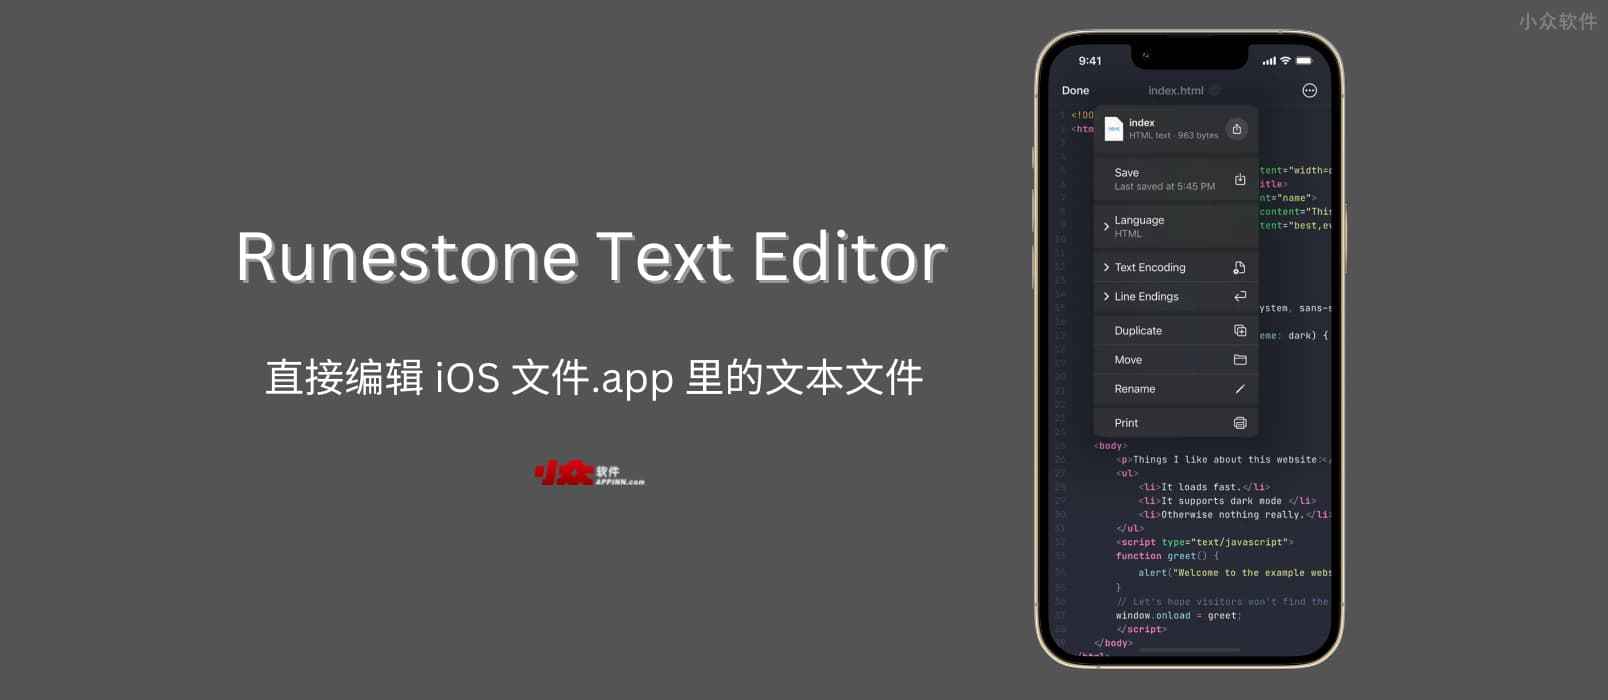 Runestone Text Editor - 文本编辑器：直接编辑 iOS 文件.app 里的文本文件